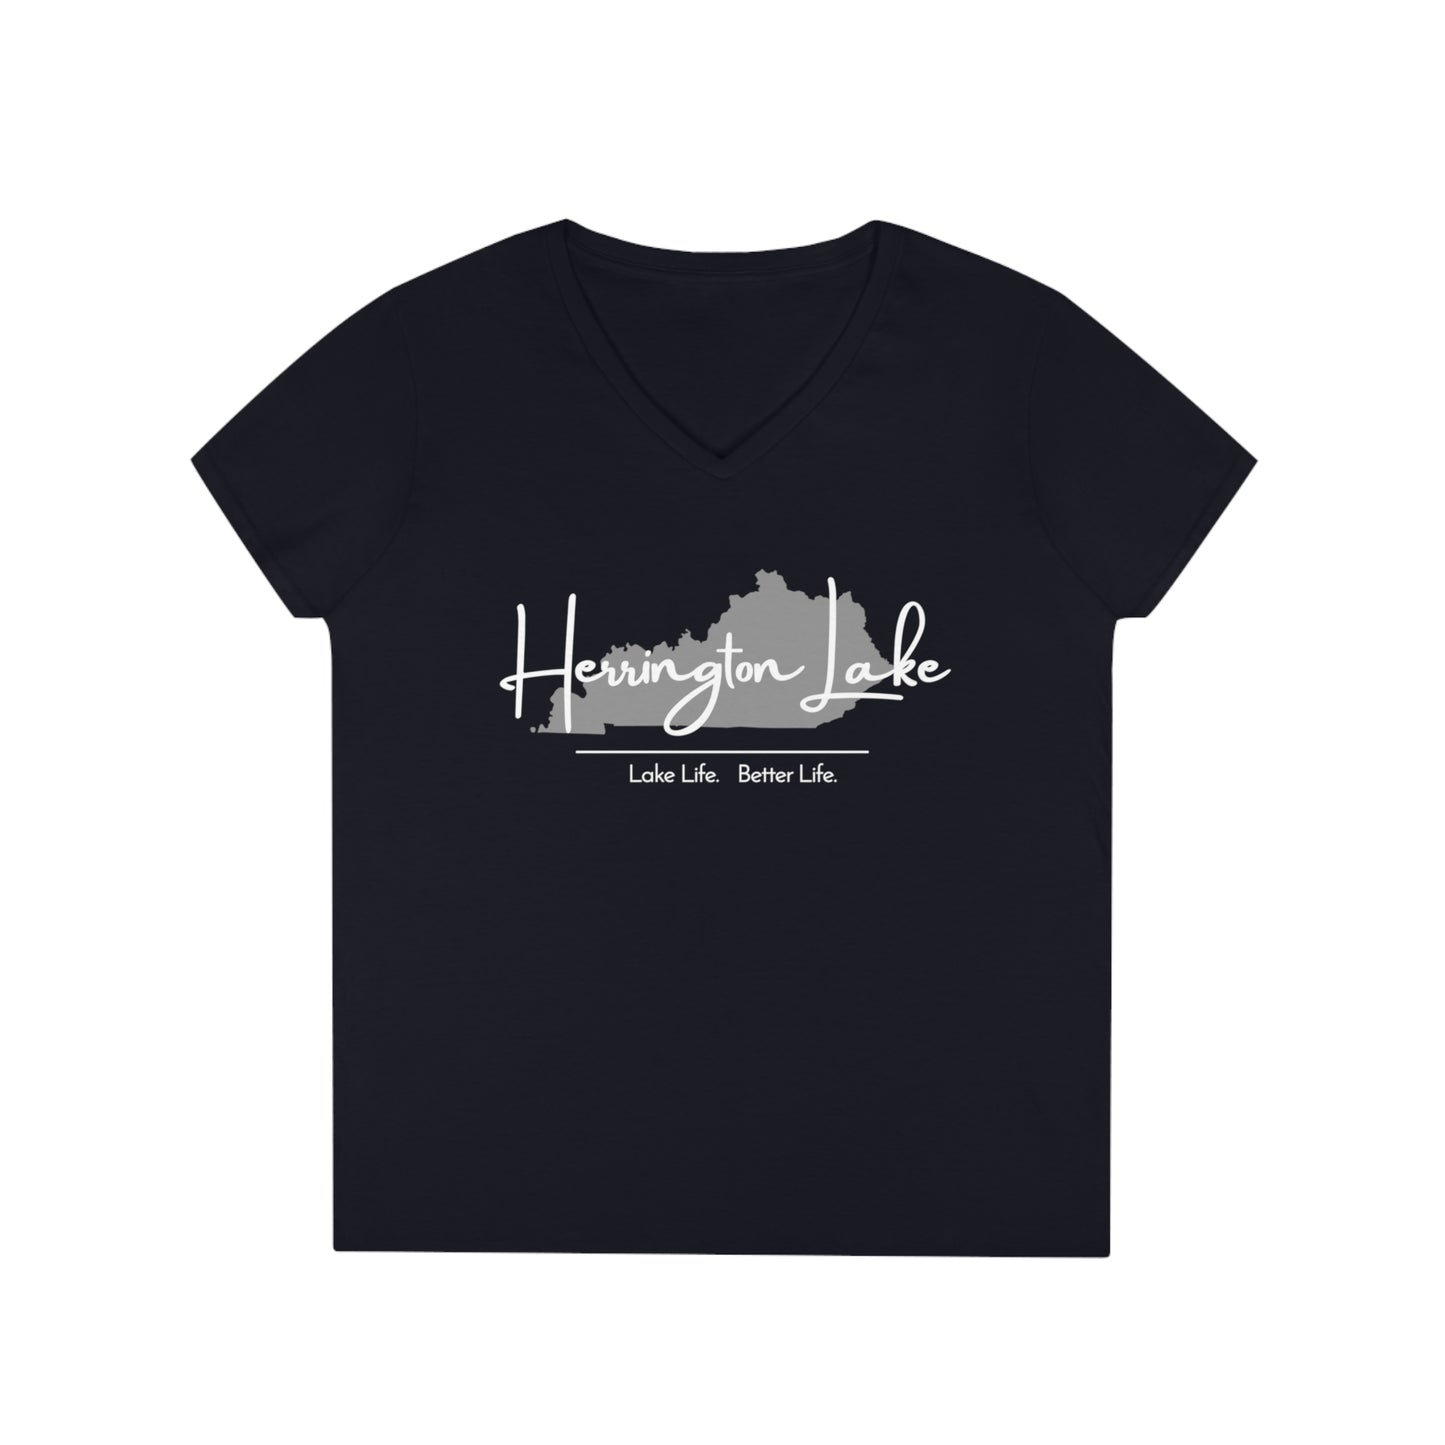 Herrington Lake Signature Collection Ladies' V-Neck T-Shirt